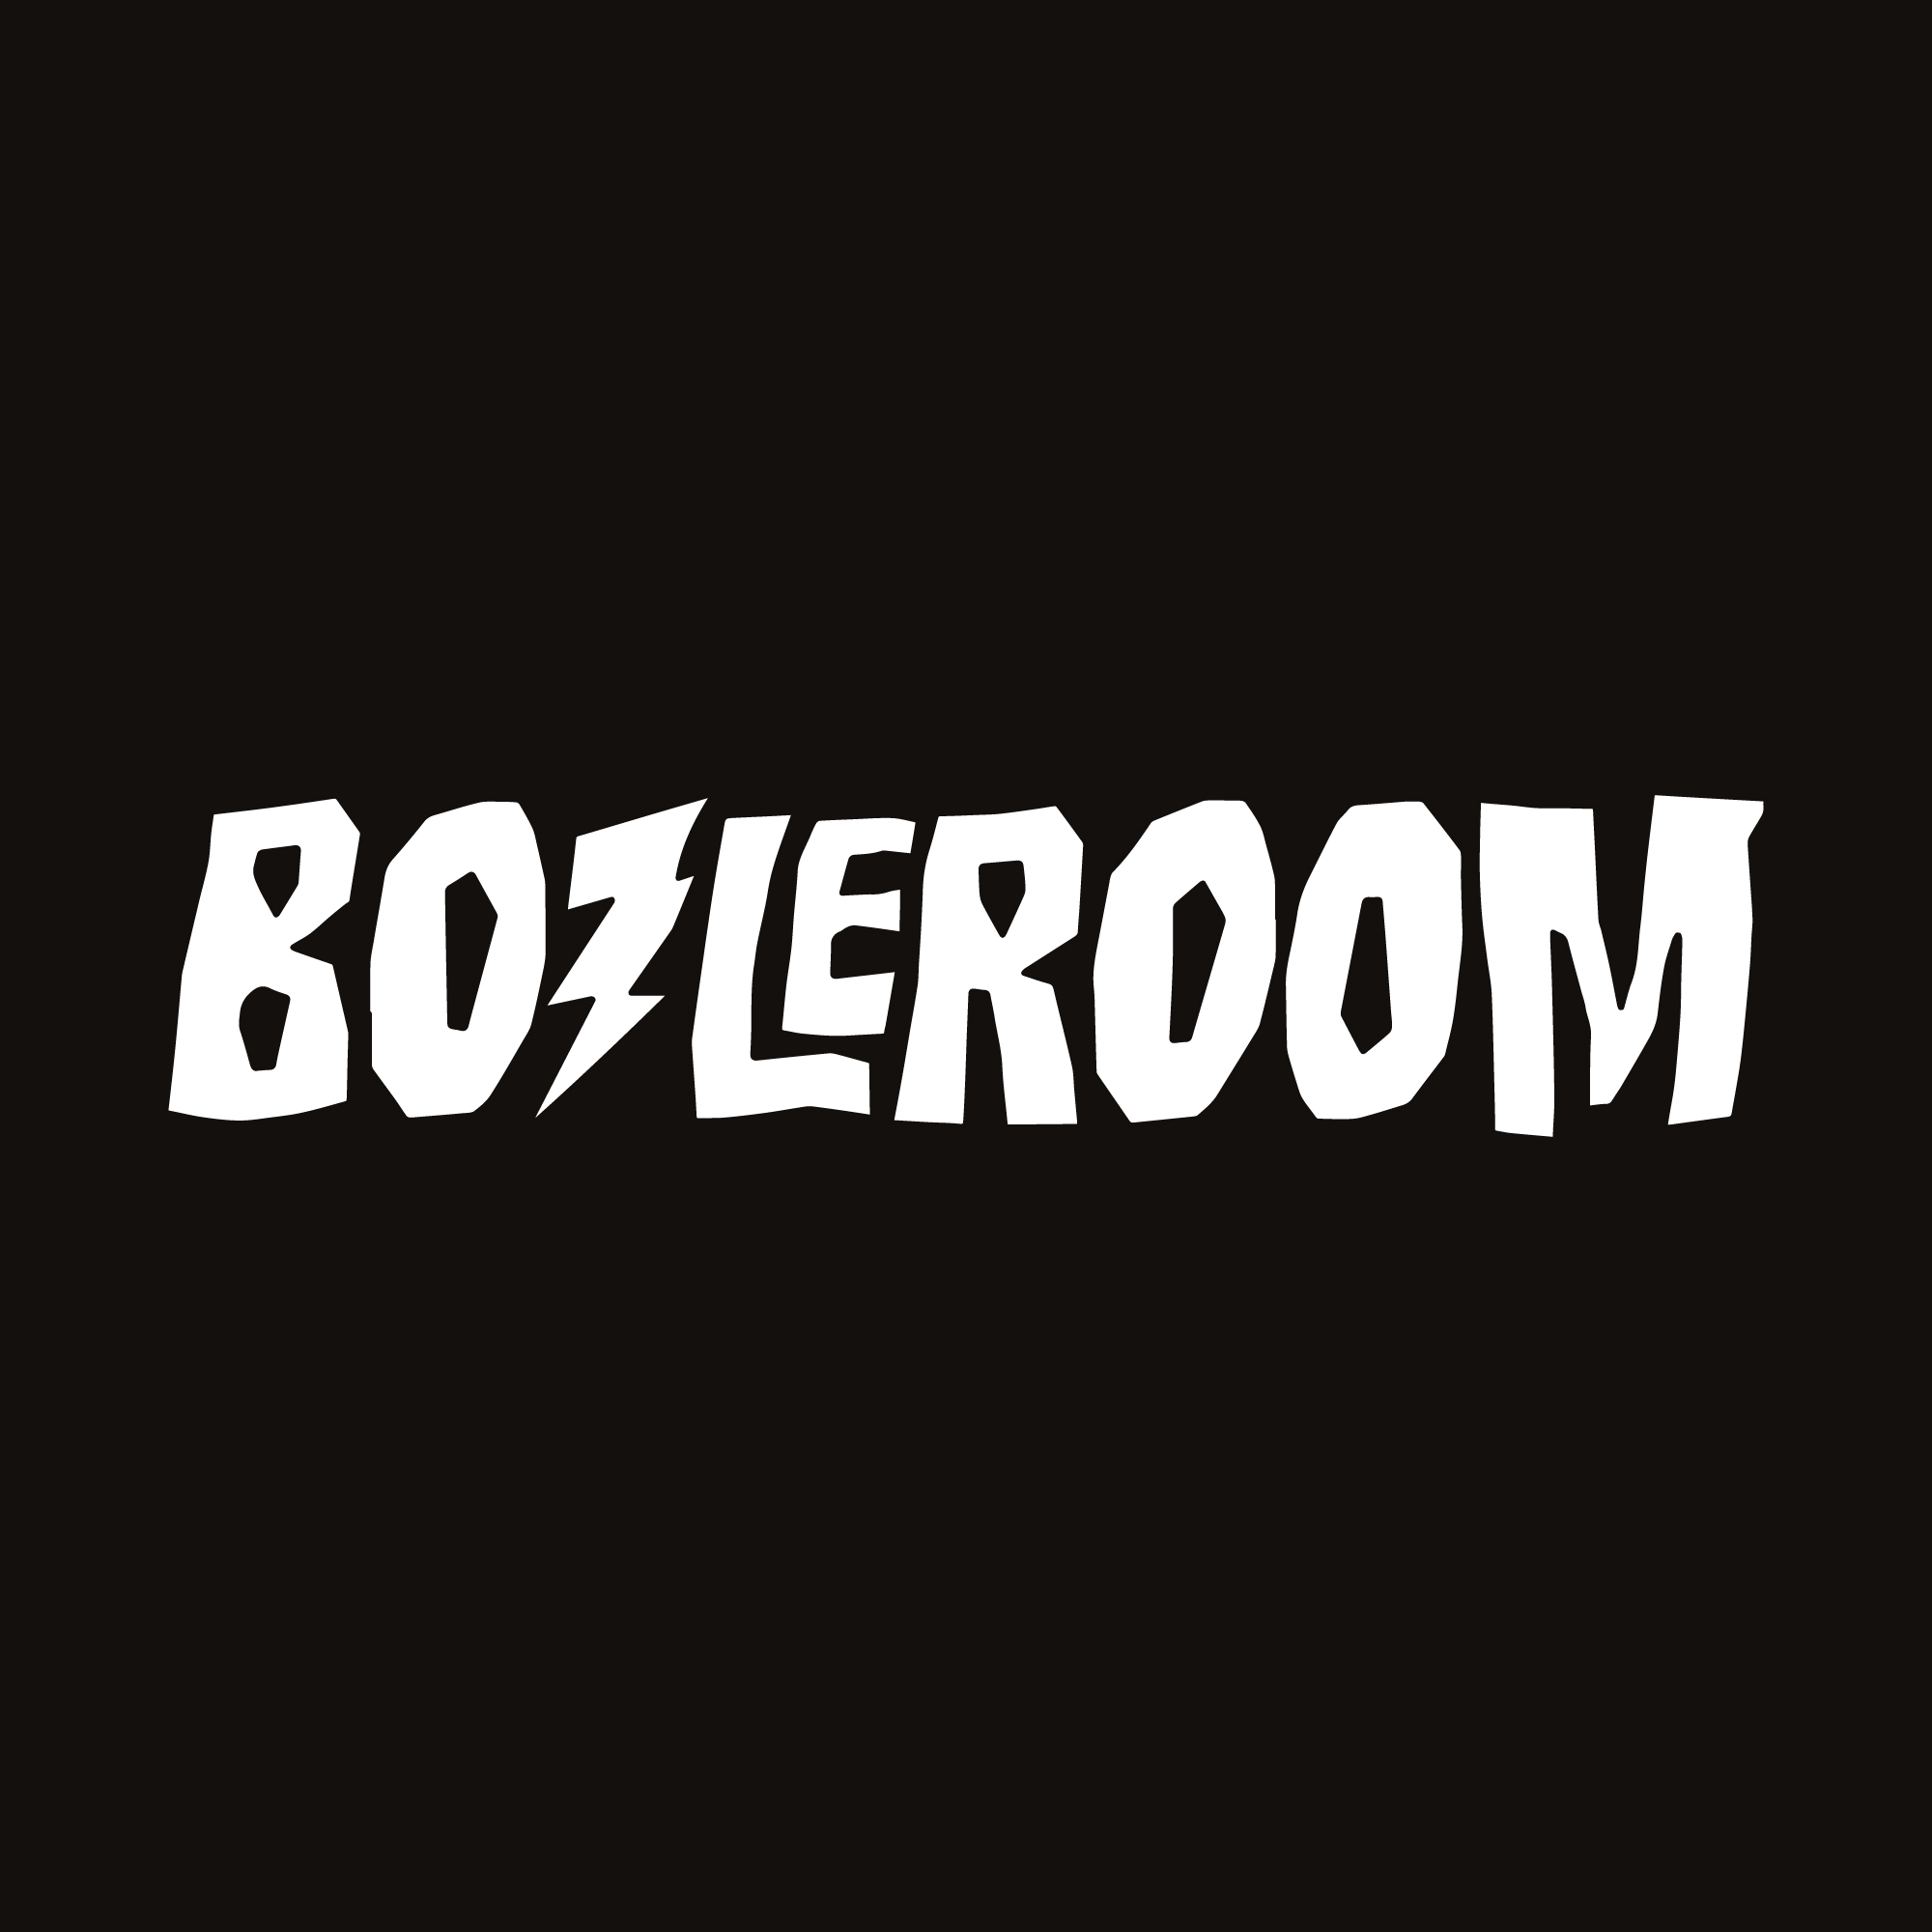 The Boileroom